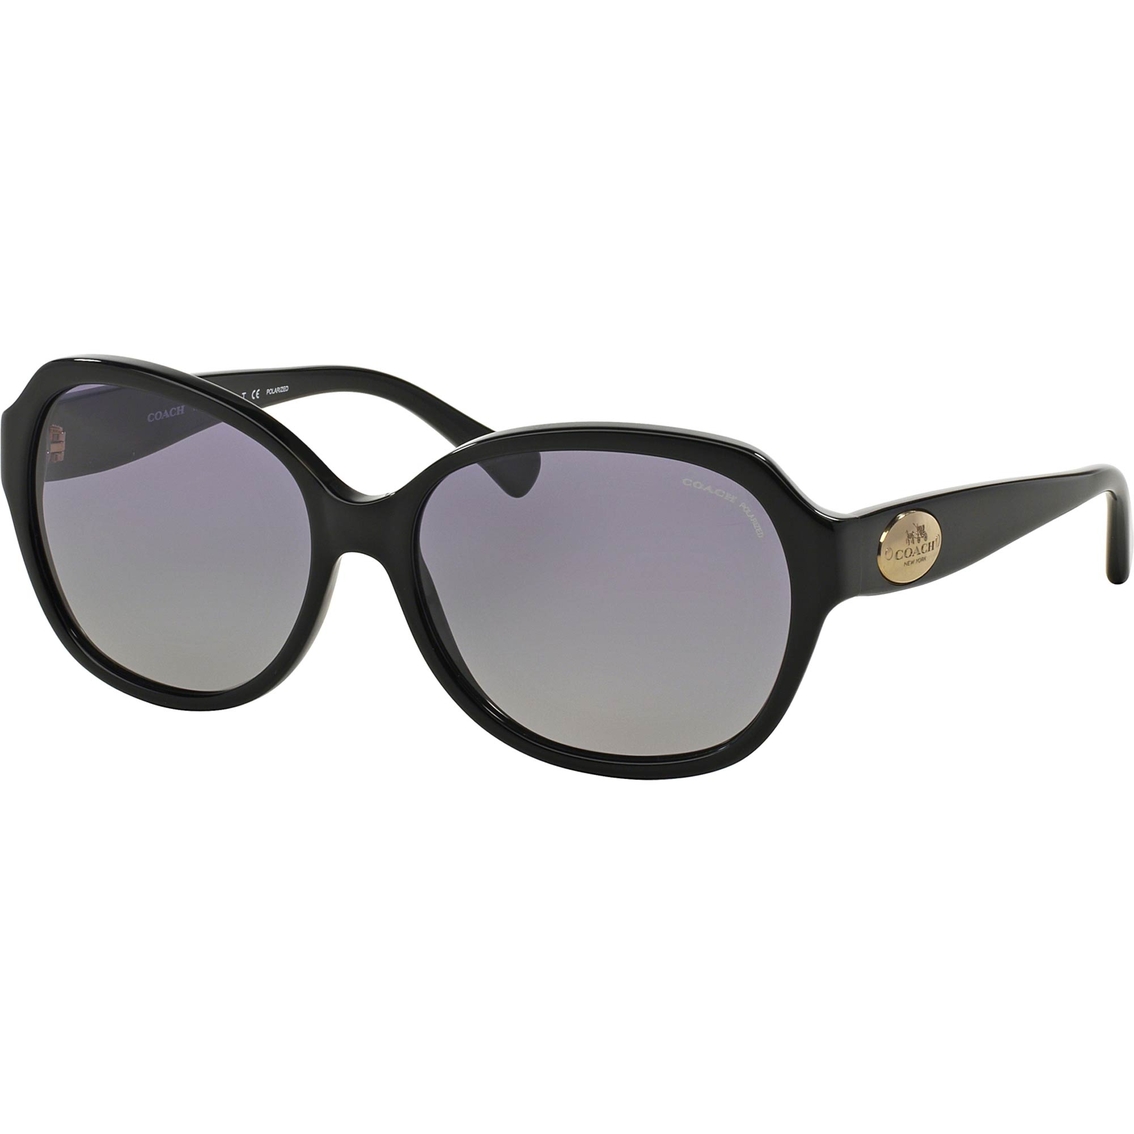 Coach Sunglasses 0hc8150 | Women's Sunglasses | Clothing & Accessories